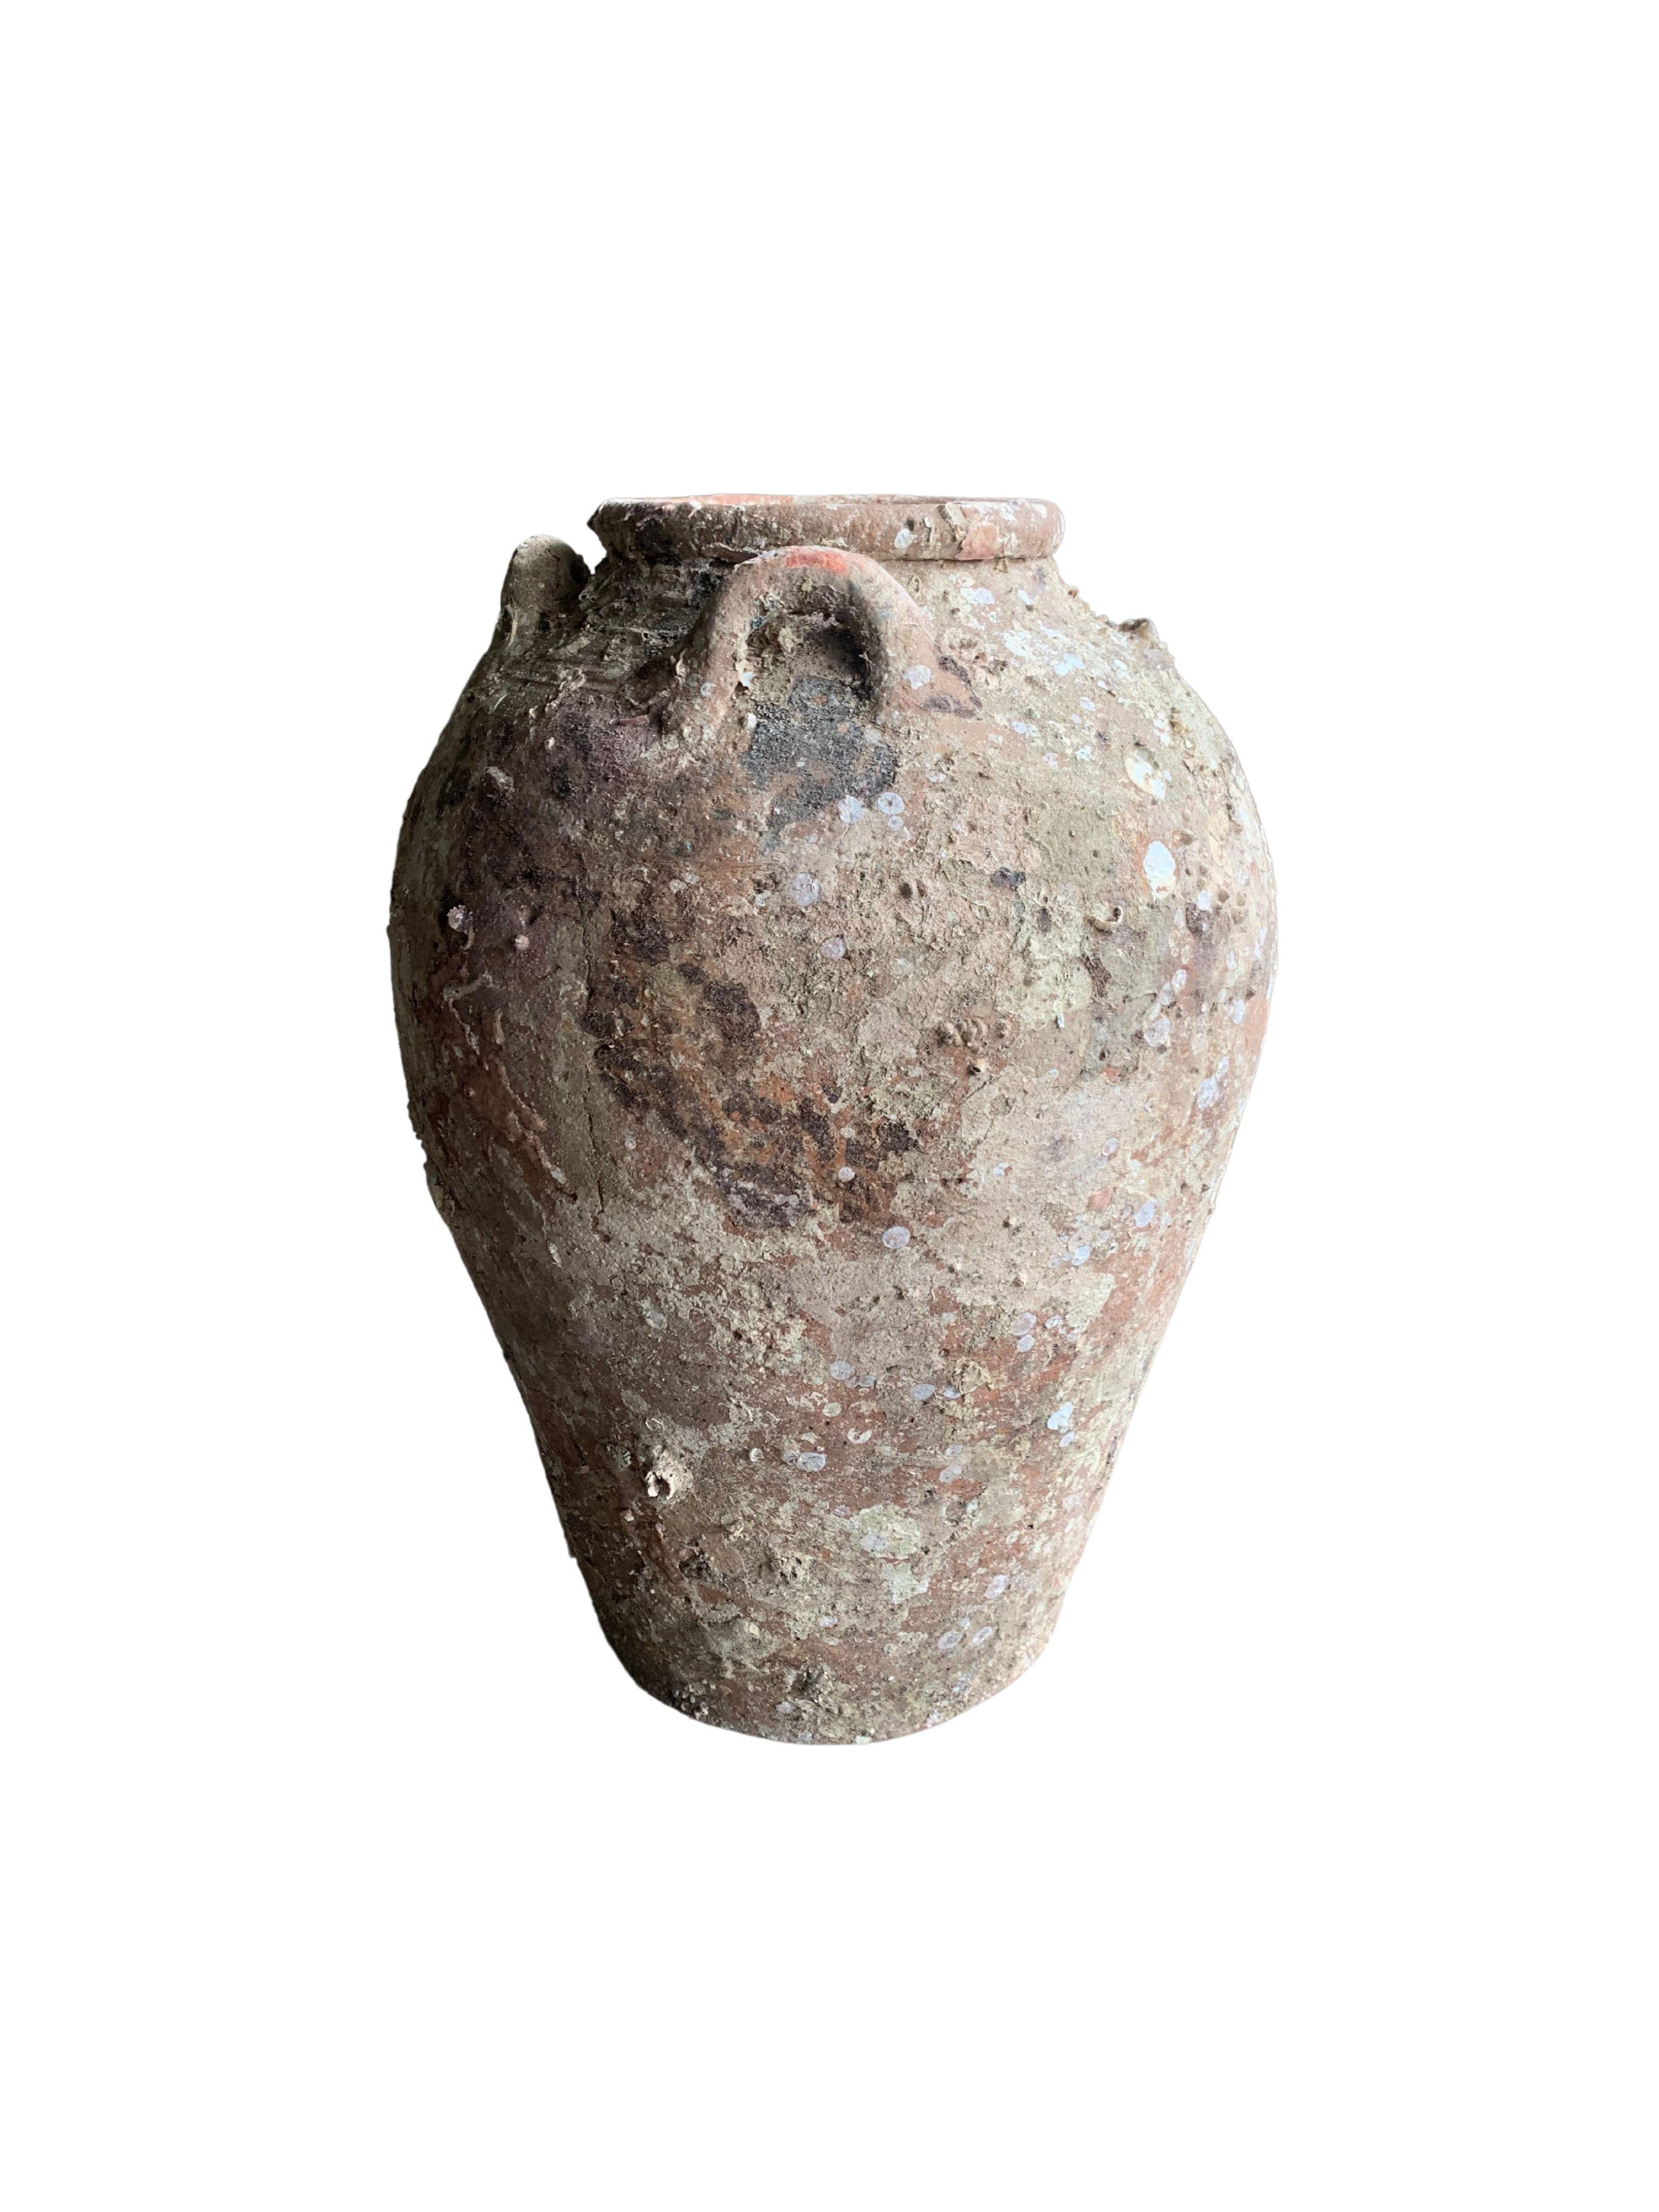 Ceramic Singburi Shipwreck Jar from the Kingdom of Sukhothai, Thailand, 17th Century